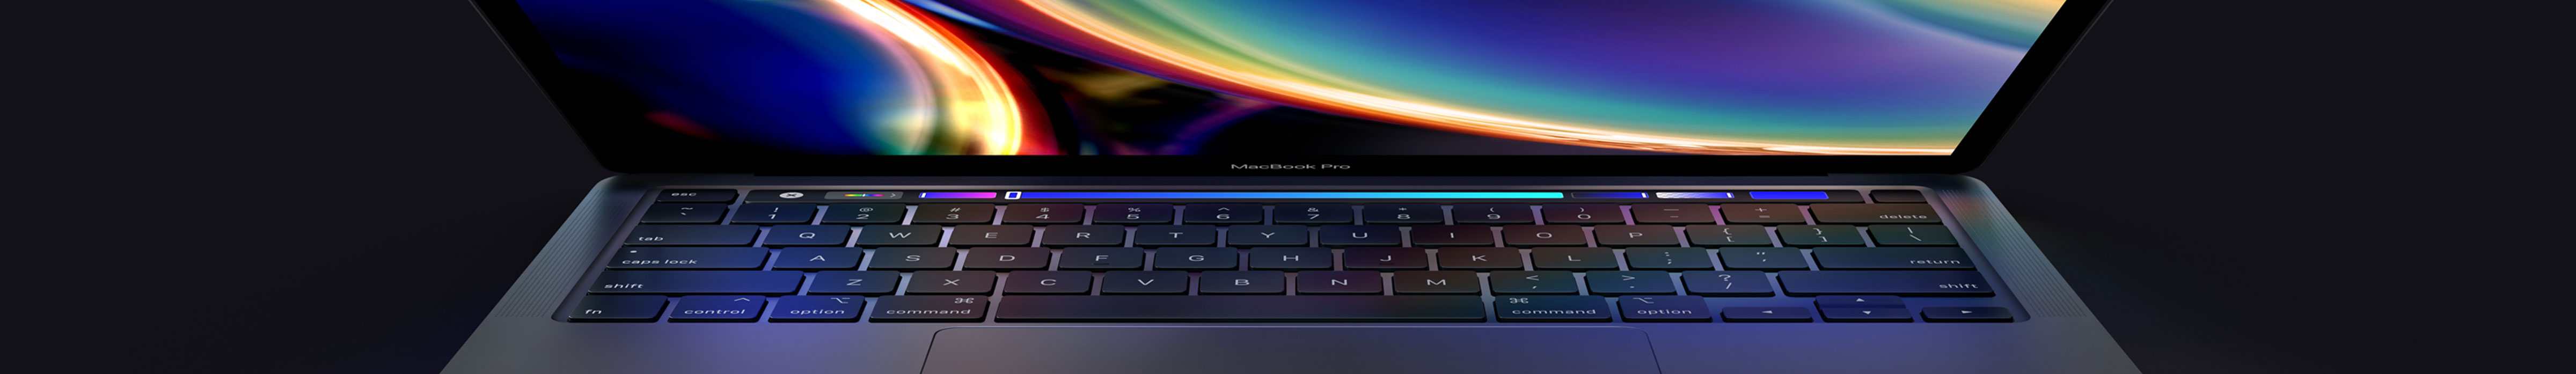 MacBook Pro 13-inch - refurbished